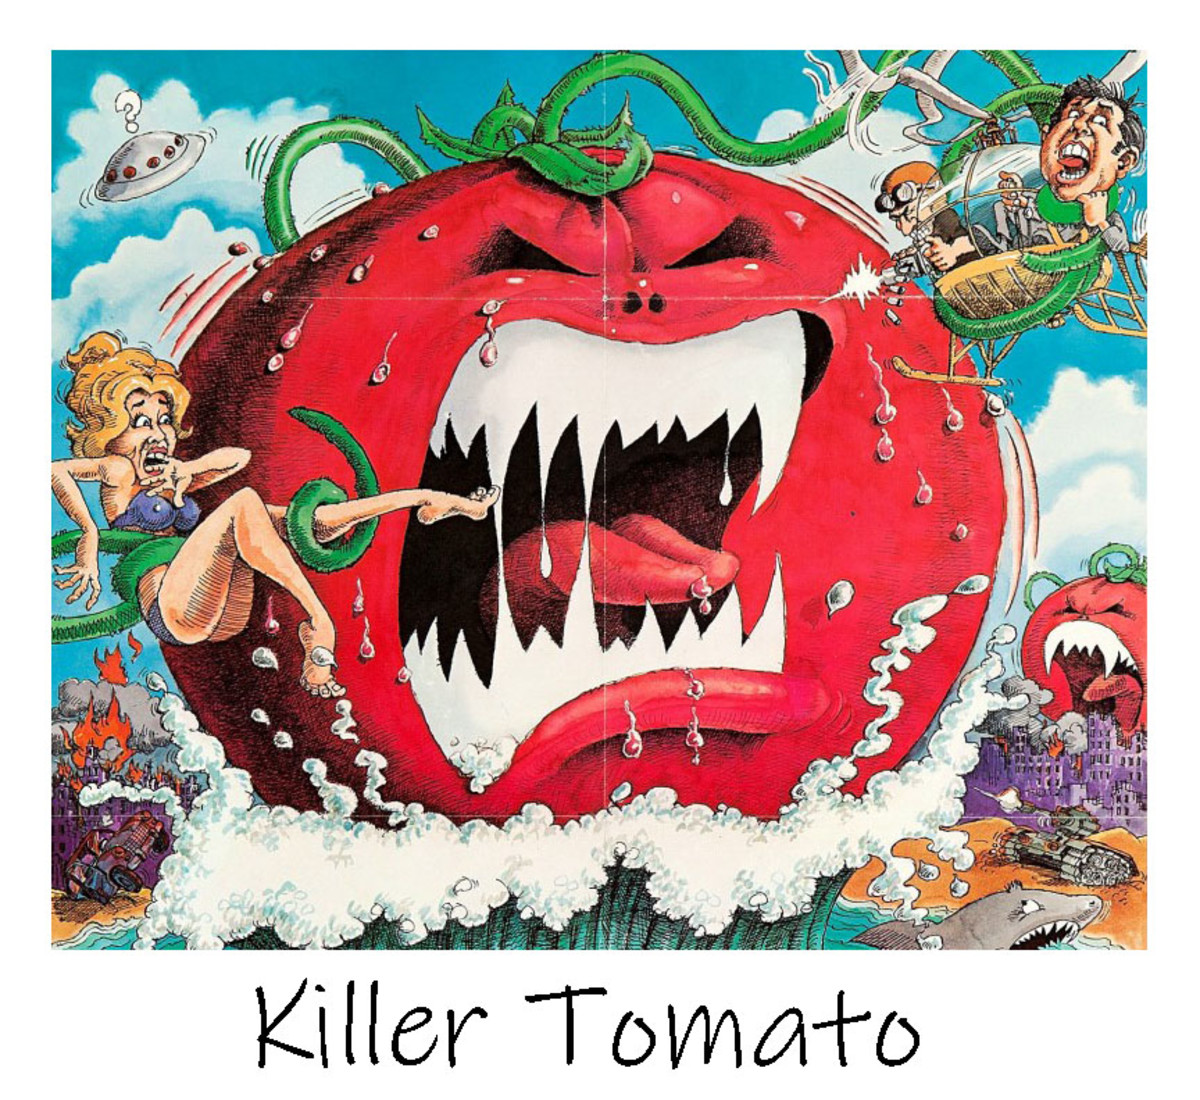 A killer tomato would make a killer cosplay idea.